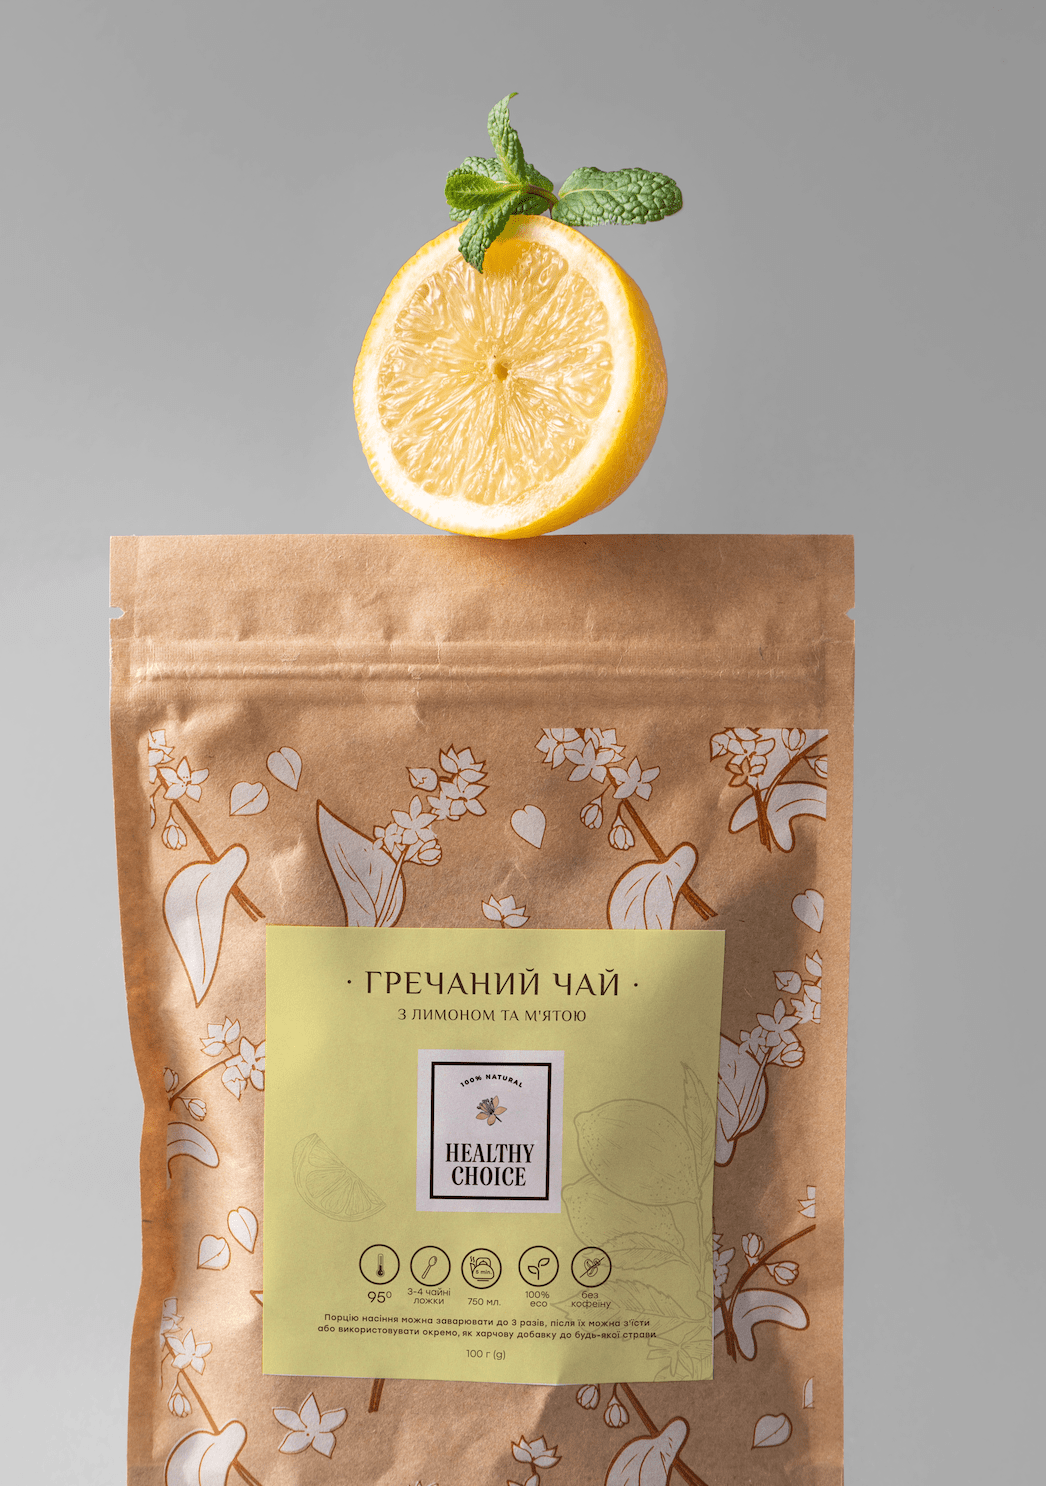 Buckwheat tea with lemon and mint - Beauty Matters